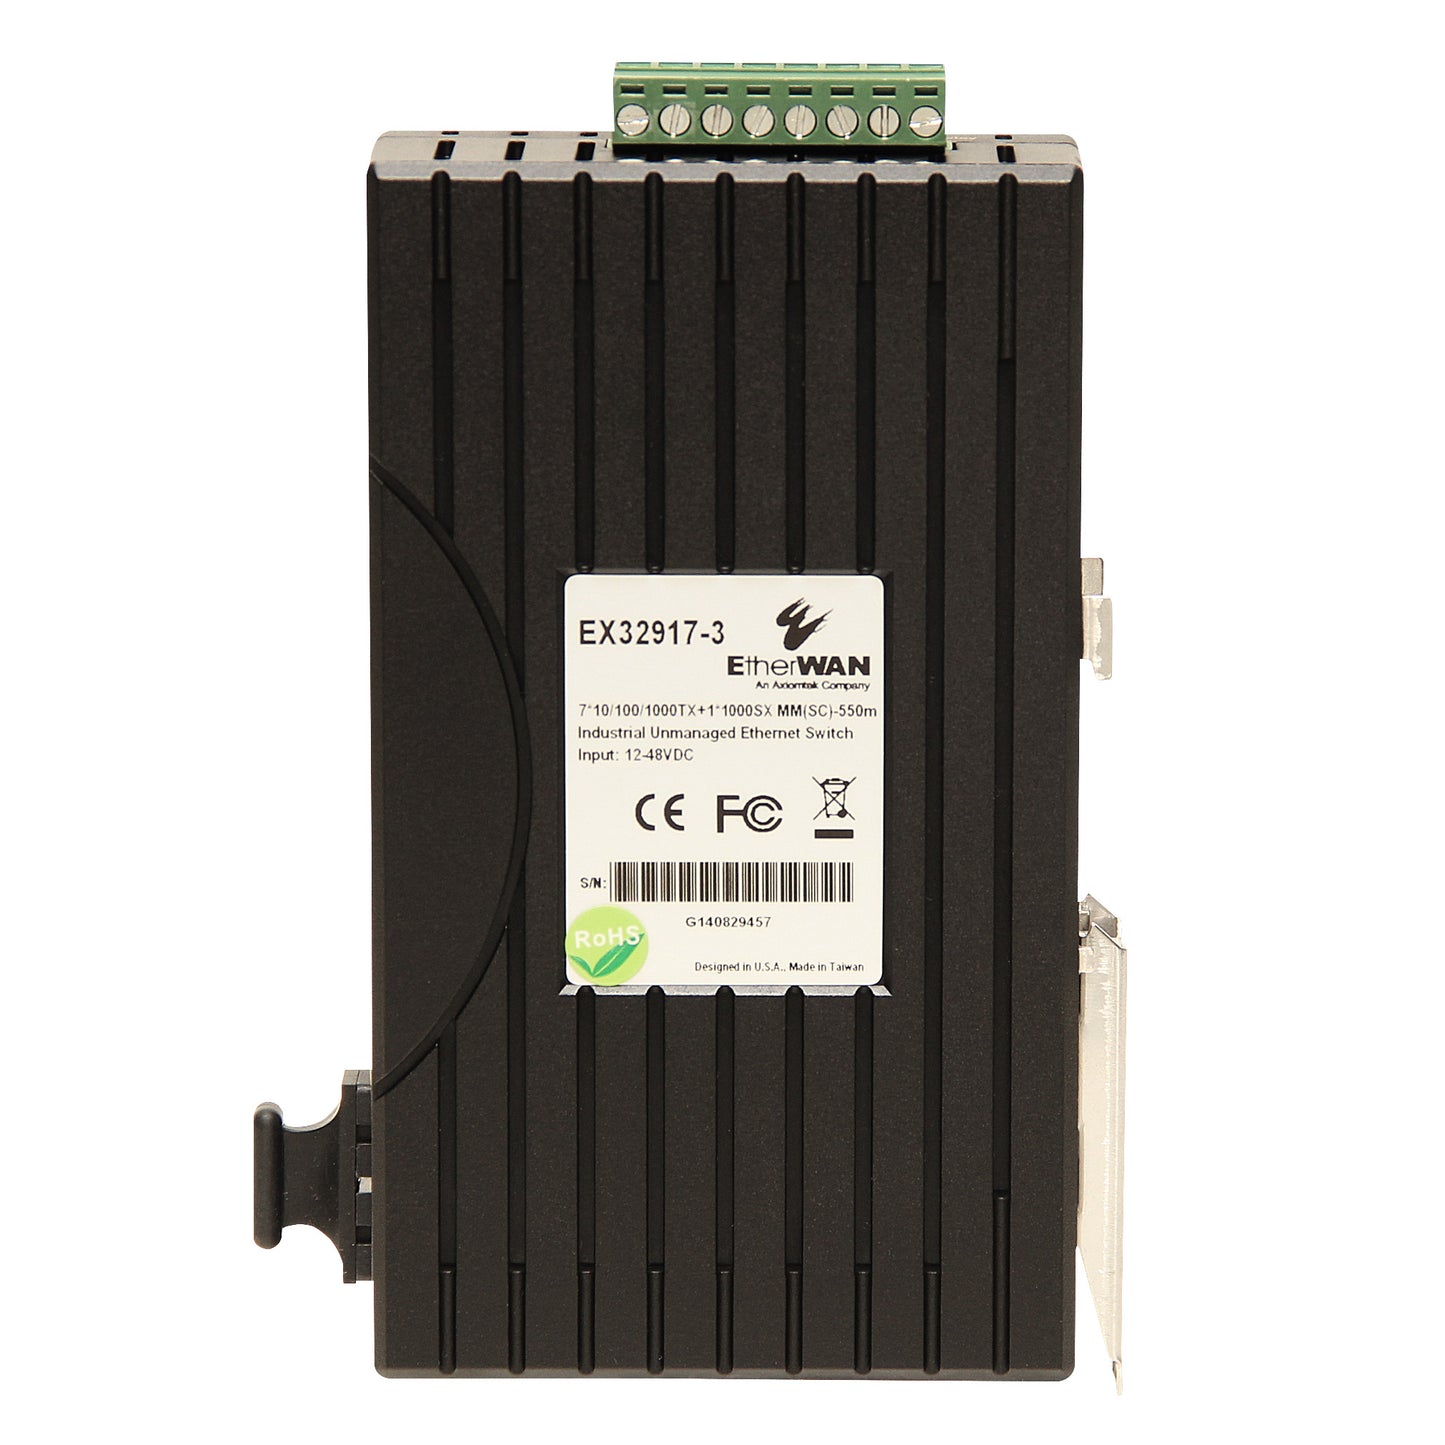 EX32917-3 - Industrial Unmanaged Gigabit Ethernet Switch (7-port 10/100/1000BASE-T +1-port 1000BASE-SX (SC) - 550m